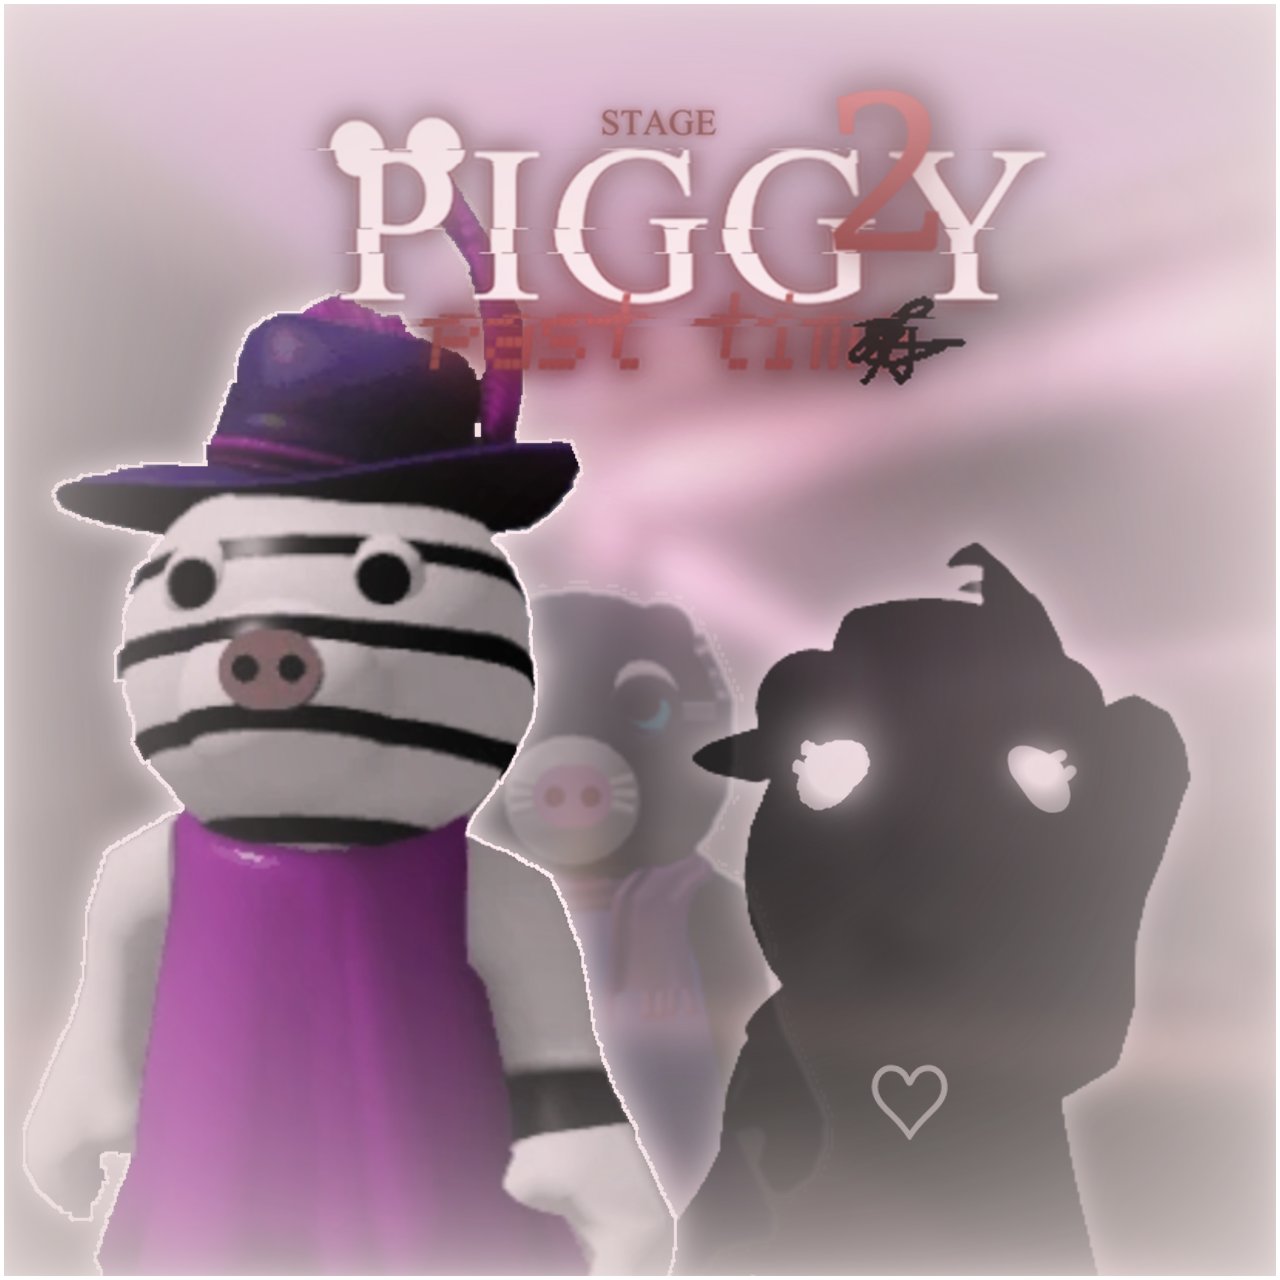 Piggy News on X: 🎉PIGGY ANNIVERSARIES🎉 The Piggy experience was